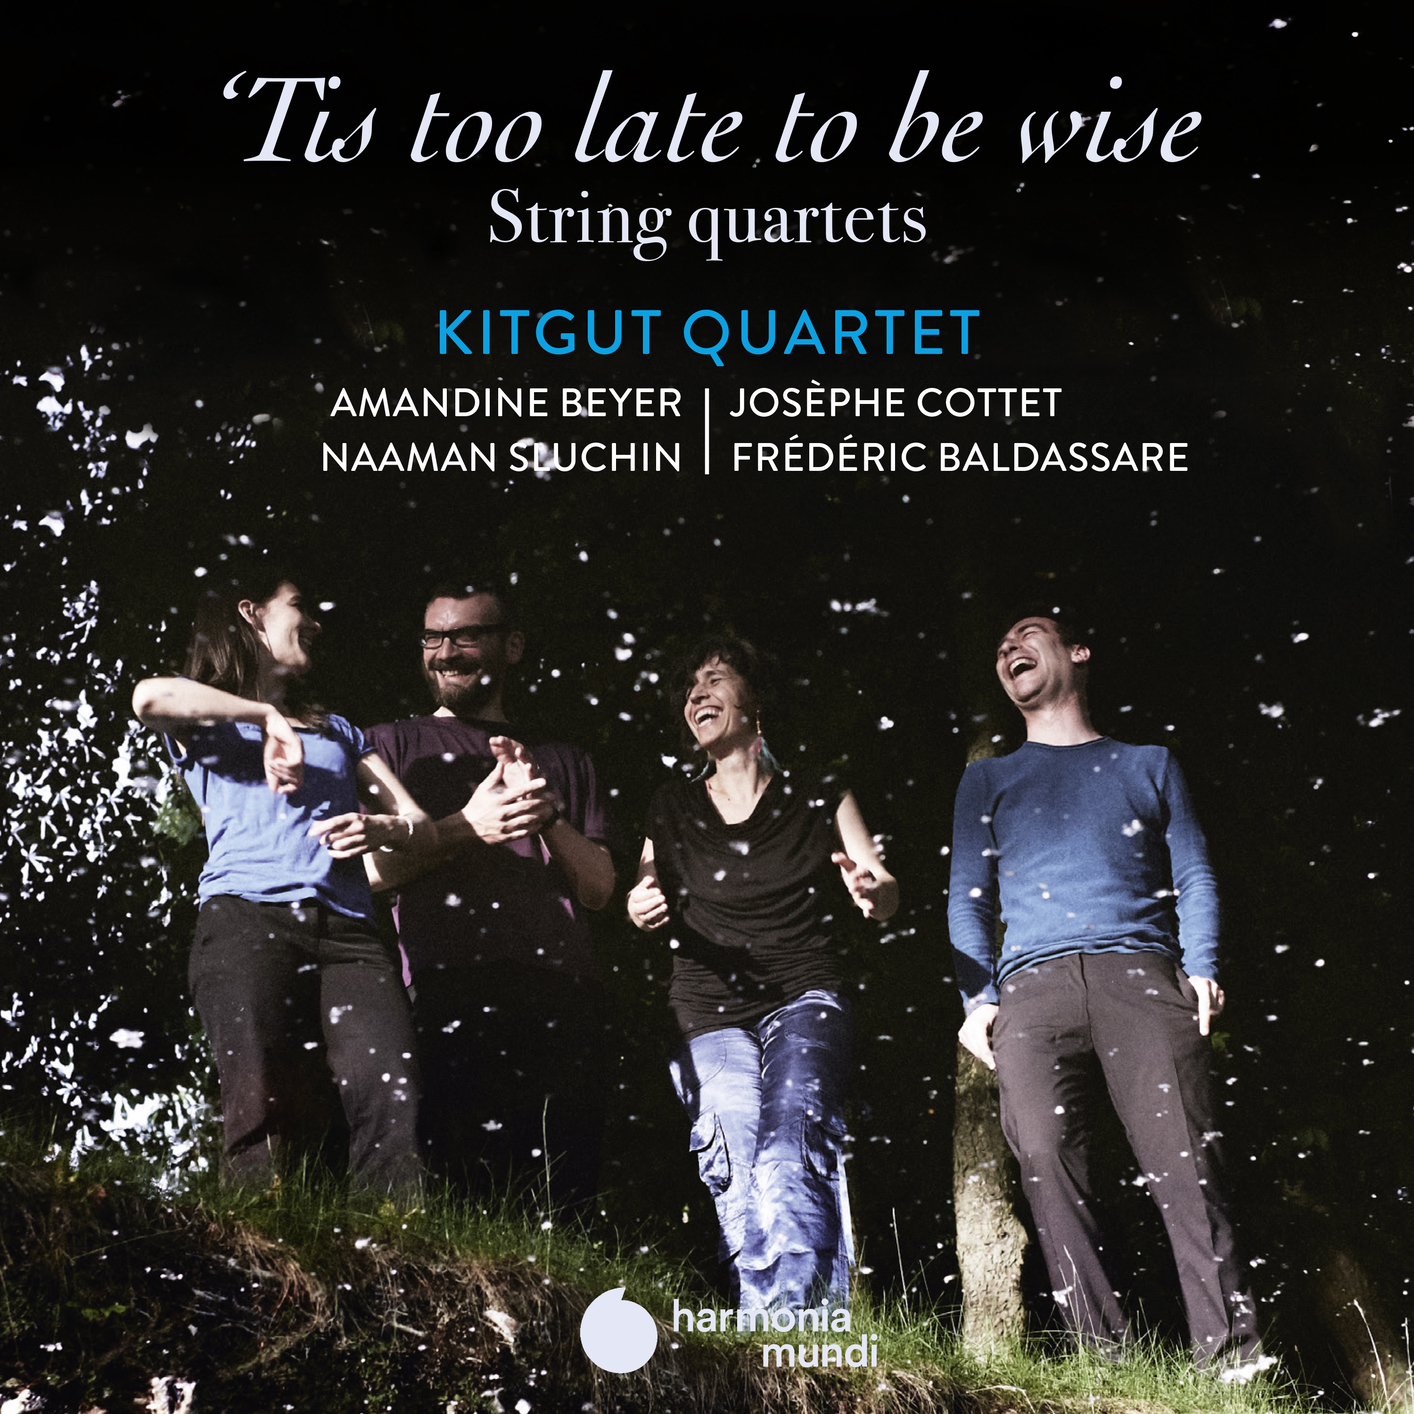 Kitgut Quartet – Tis too late to be wise (2020) [FLAC 24bit/96kHz]